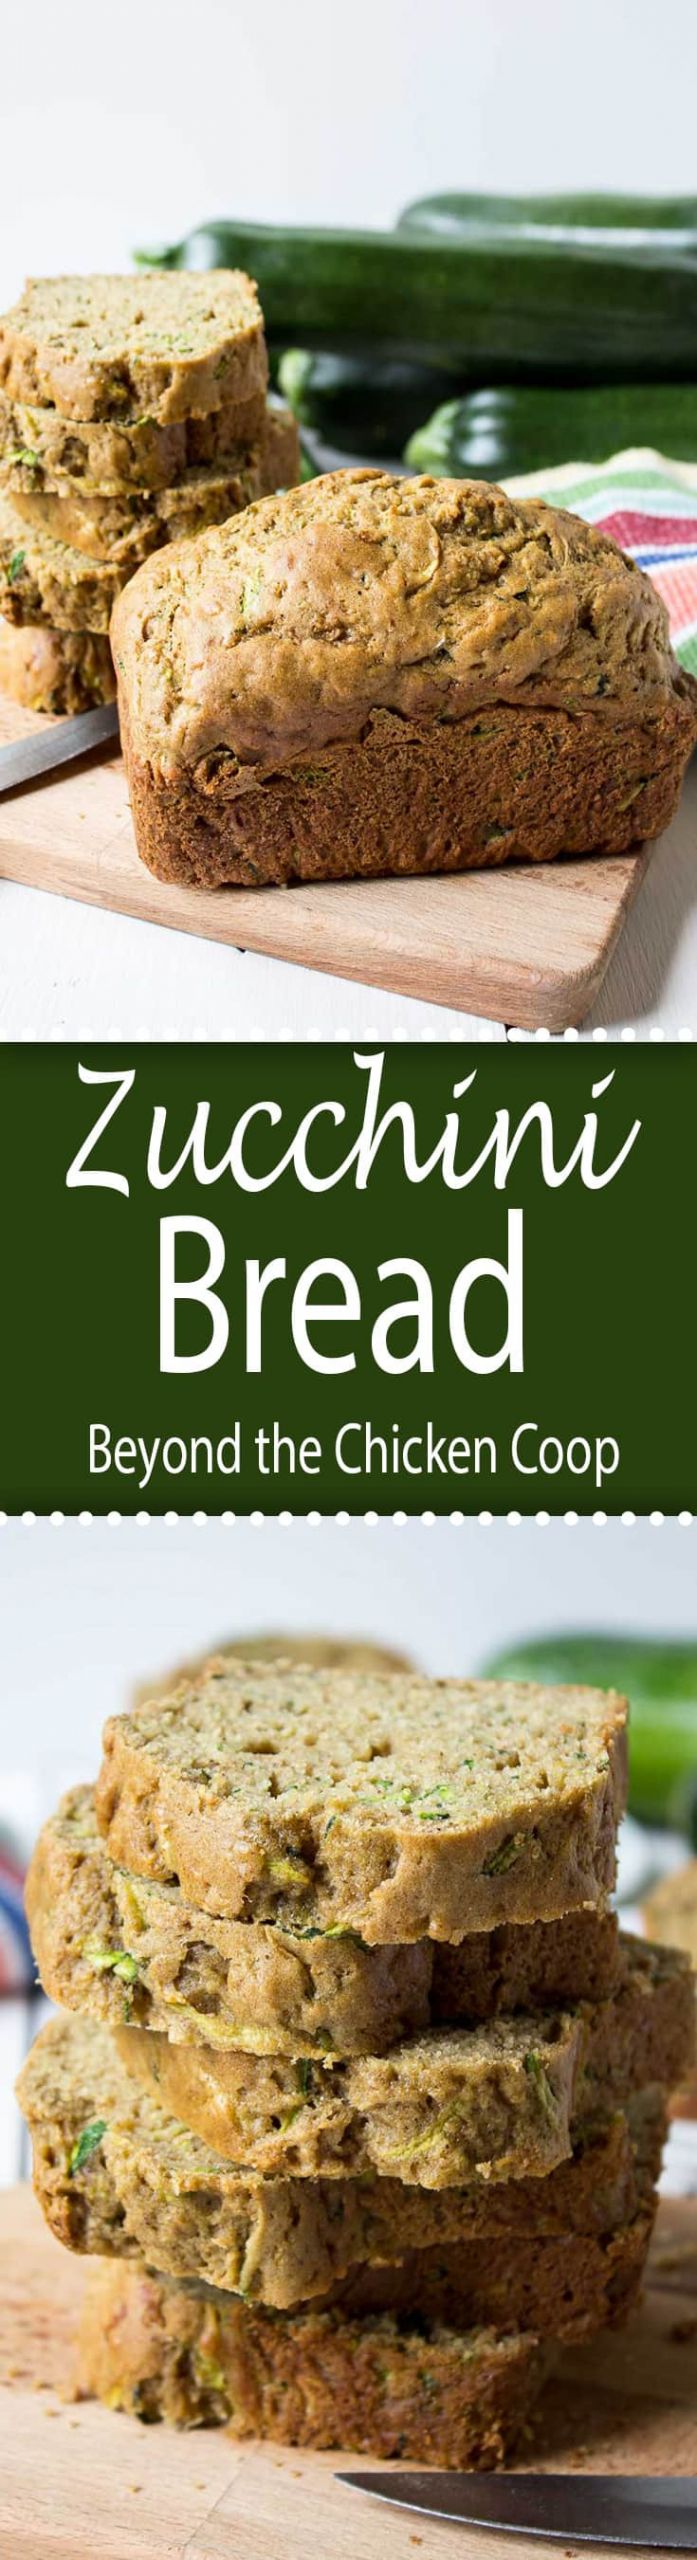 Whole Wheat Zucchini Bread
 Whole Wheat Zucchini Bread Beyond The Chicken Coop